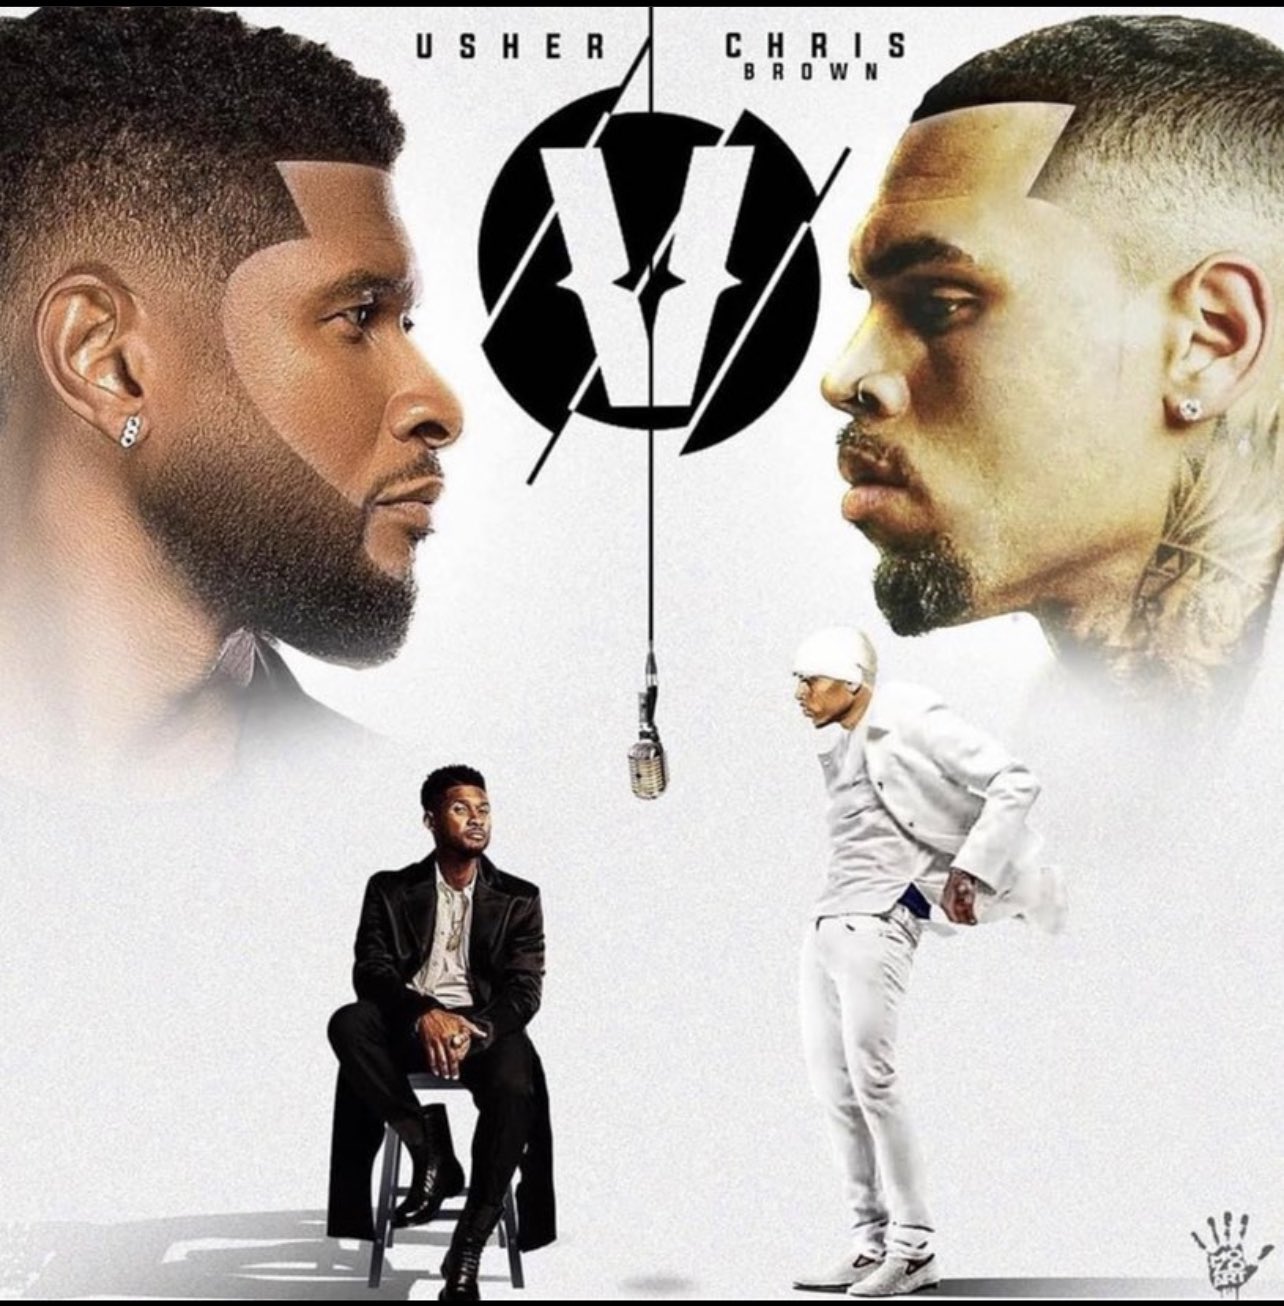 Usher vs. Chris Brown: A Battle of Greats